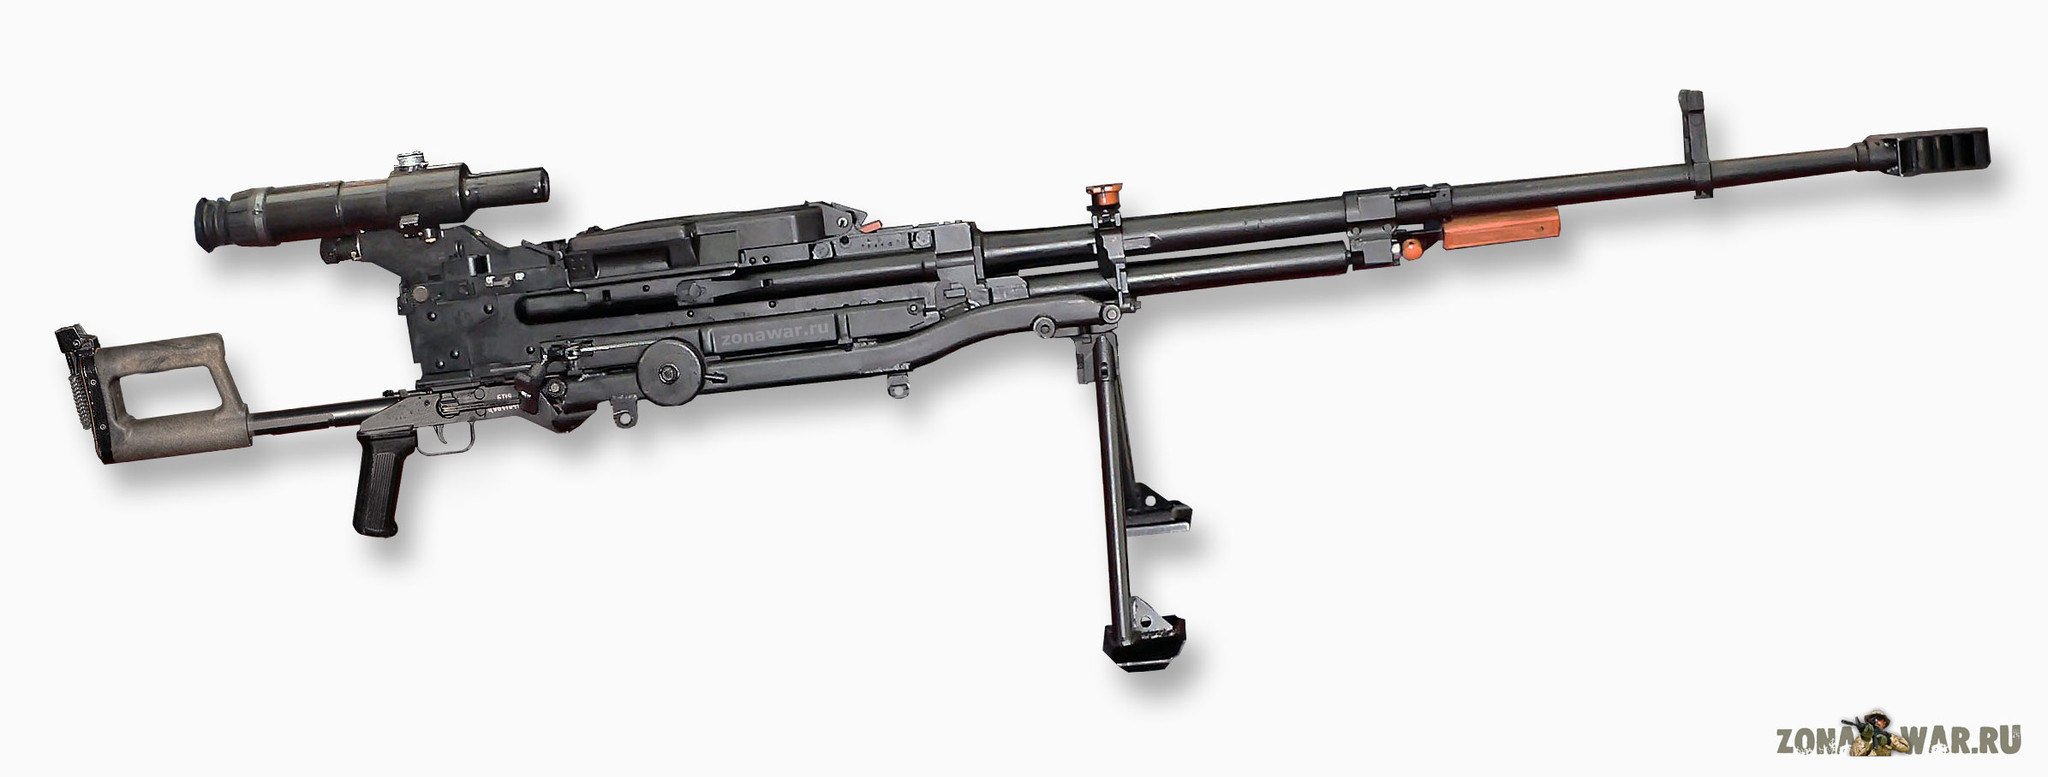 «KORD» large caliber machine gun